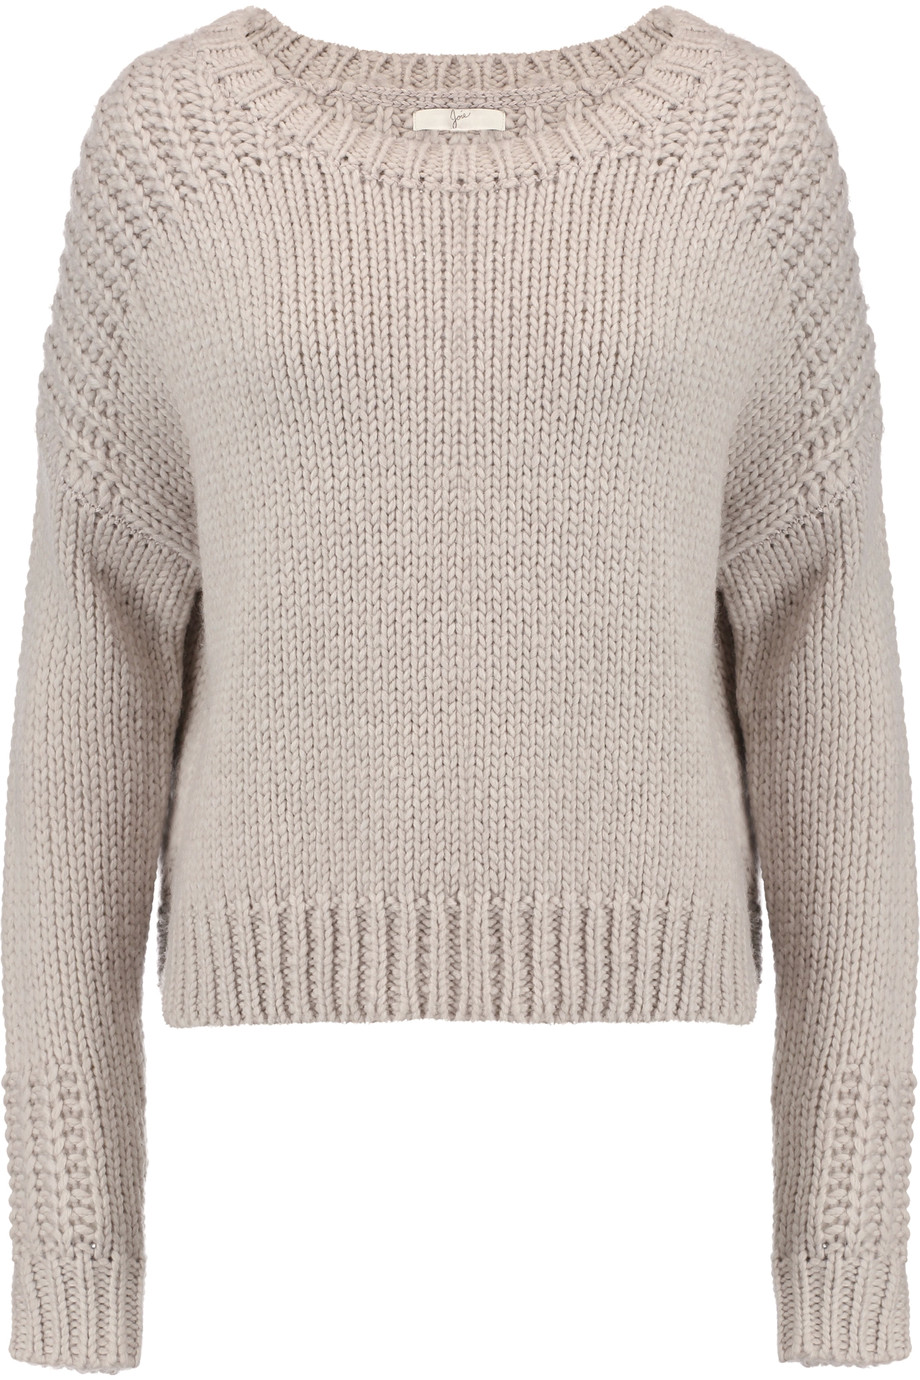 Joie Blaisie Knitted Sweater | ModeSens